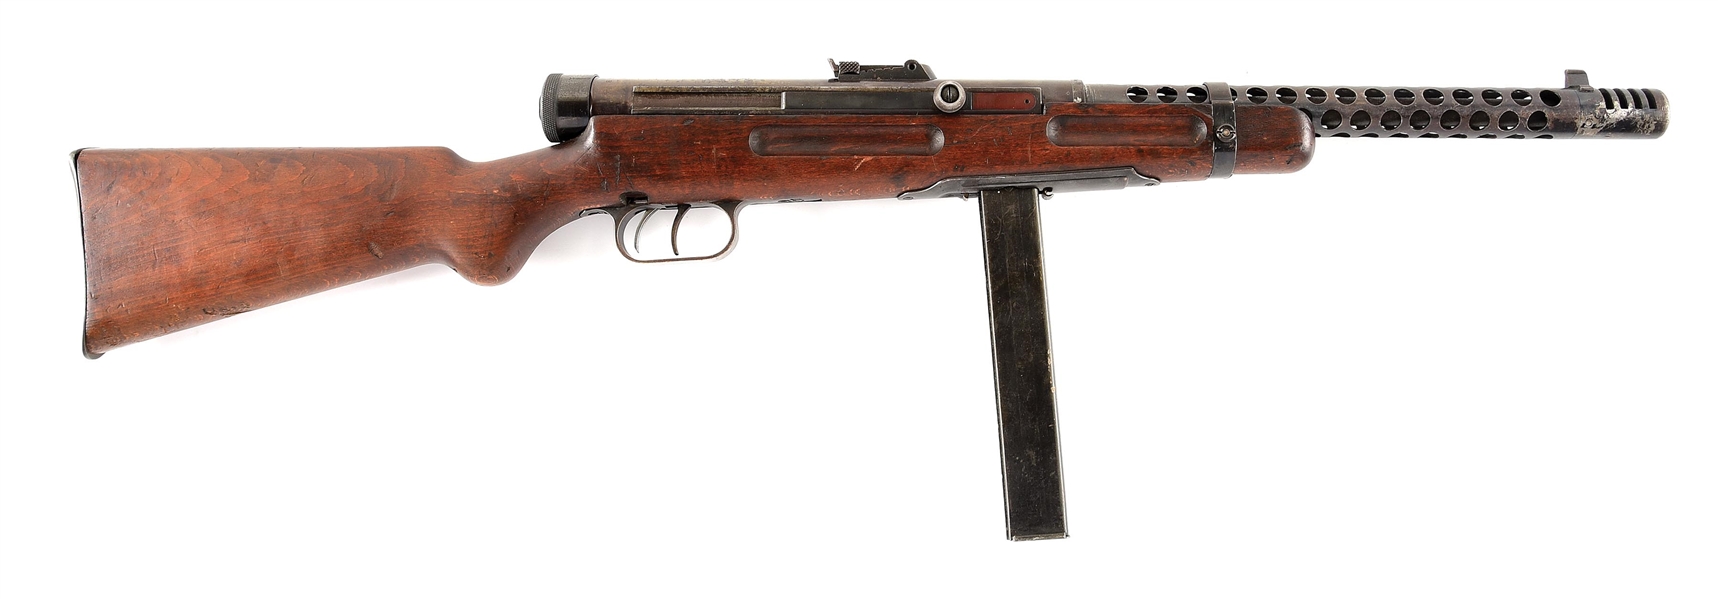 (N) ITALIAN WORLD WAR II BERETTA MODEL 38A MACHINE GUN WITH ORIGINAL AMNESTY & STATE REGISTRATION PAPERWORK (CURIO & RELIC).